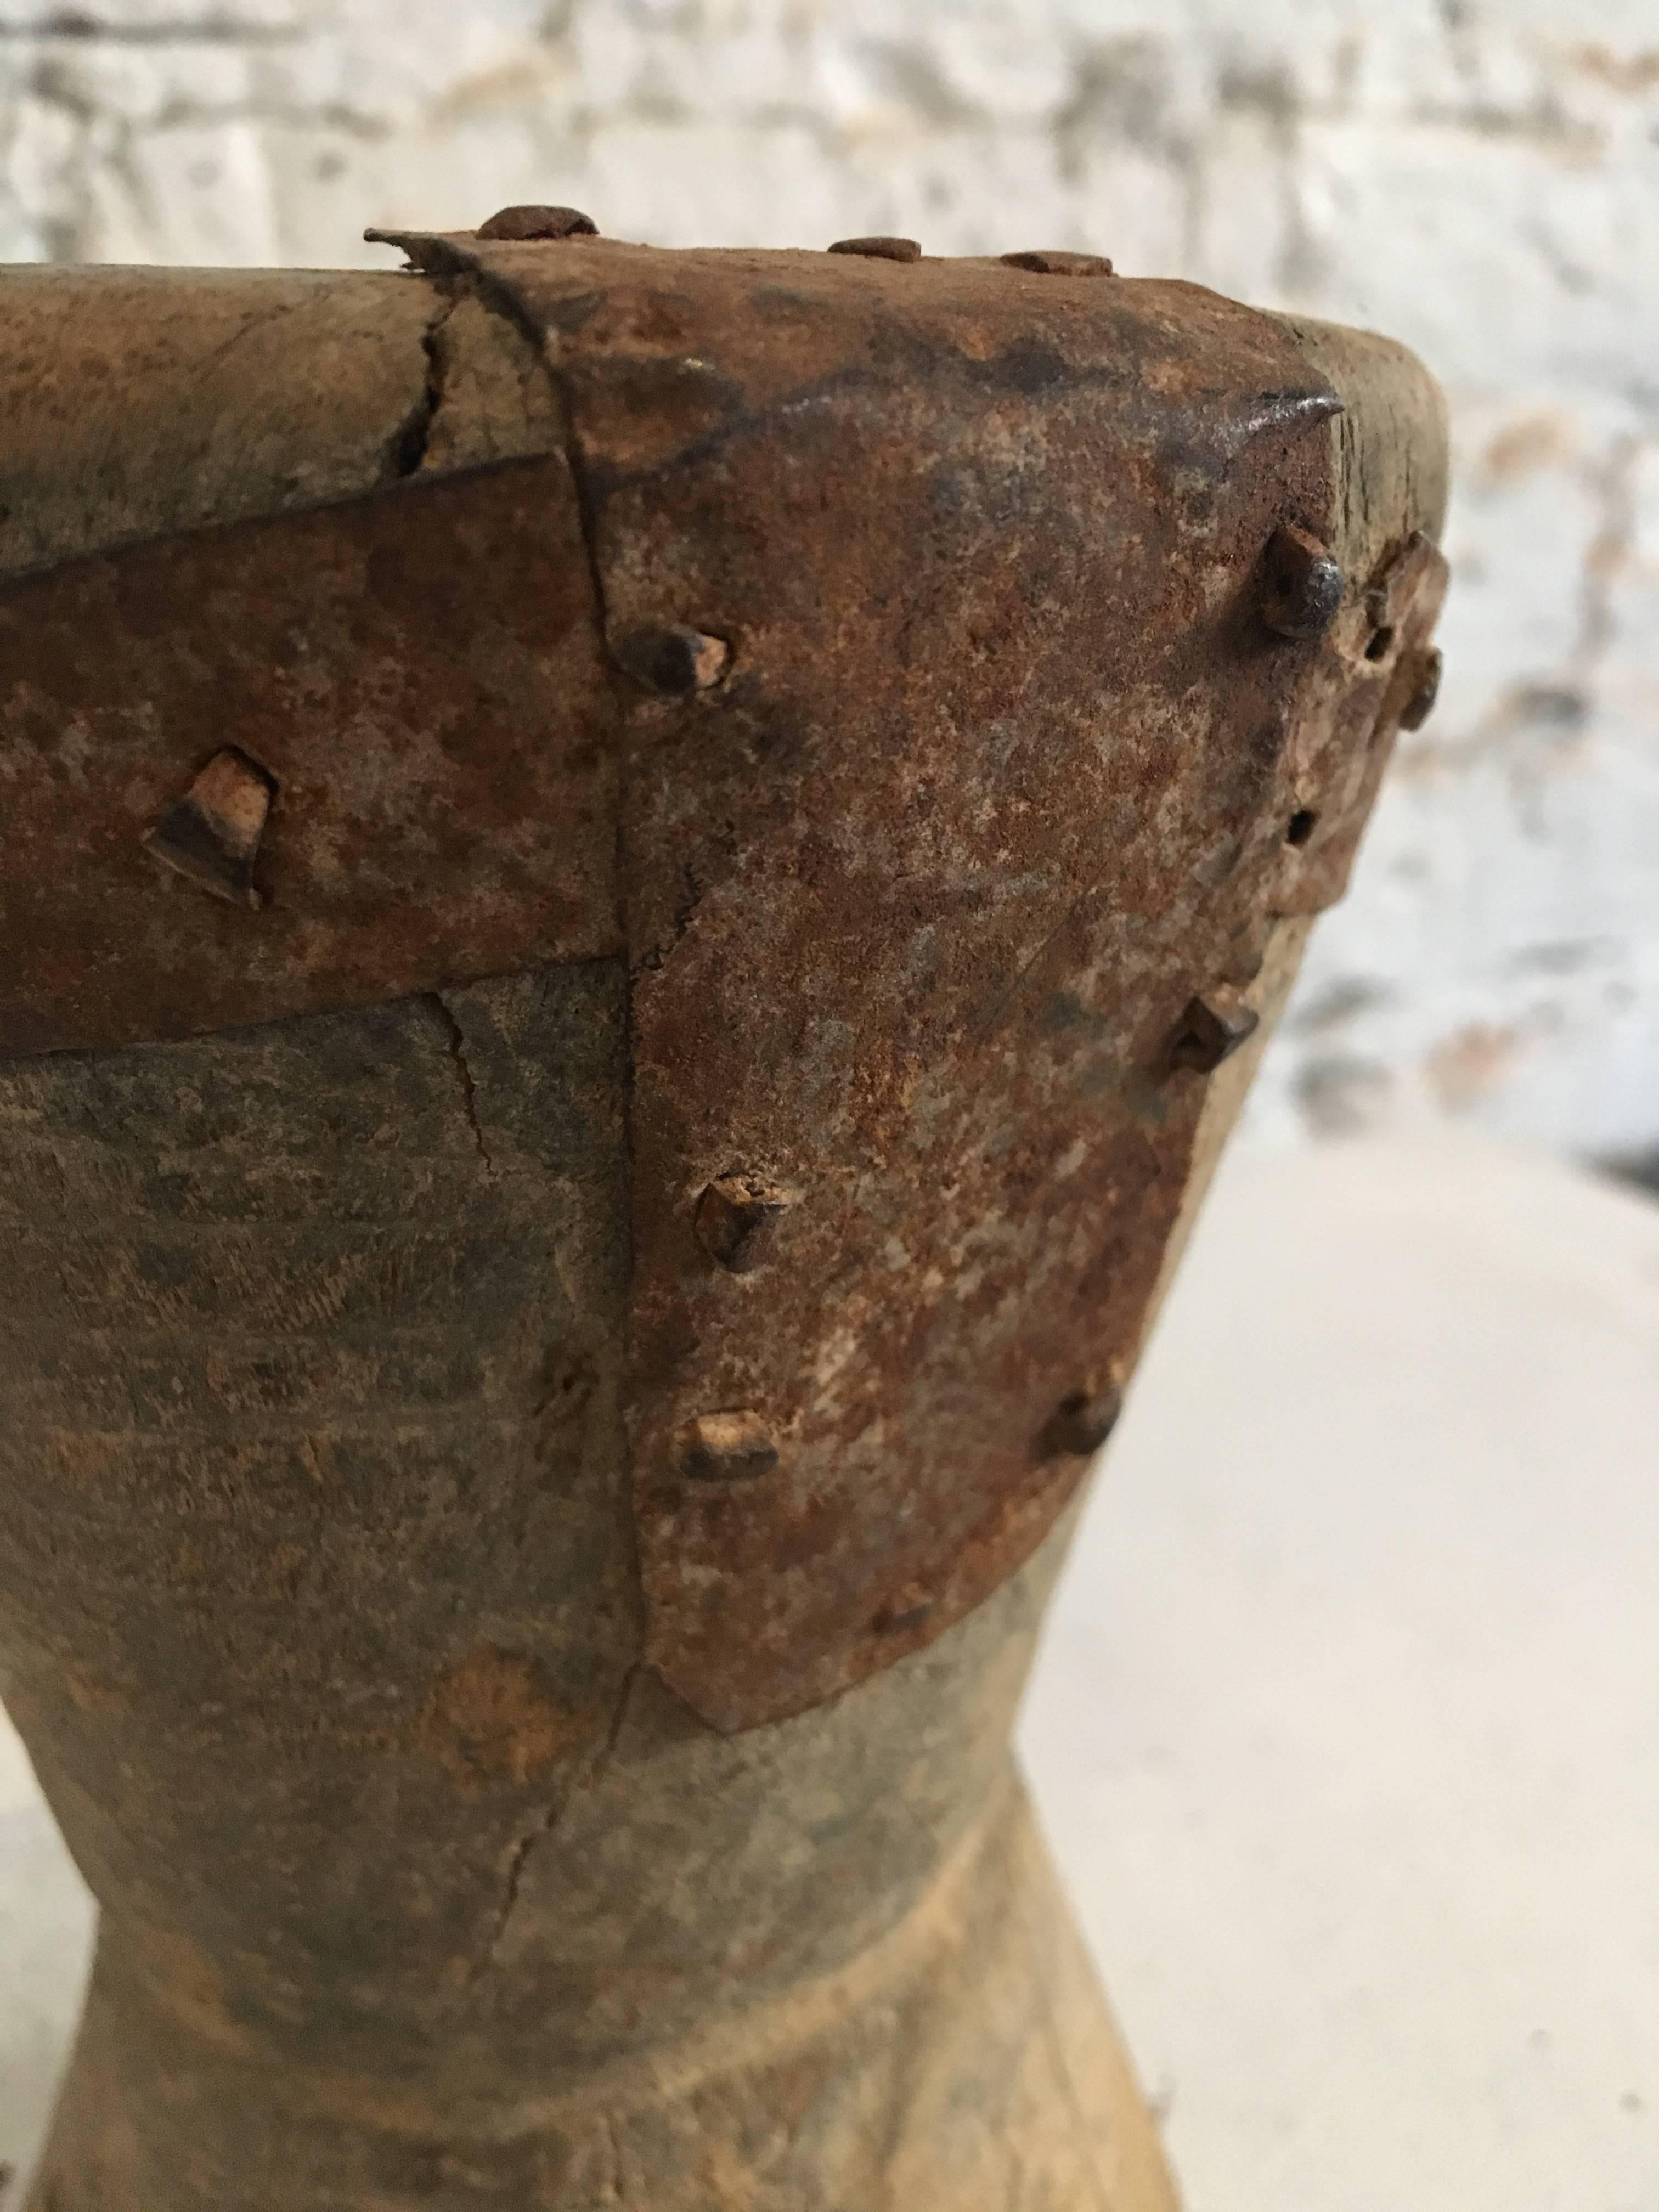 19th century small wooden/metal Mortar from Yemen/Saudi Border.